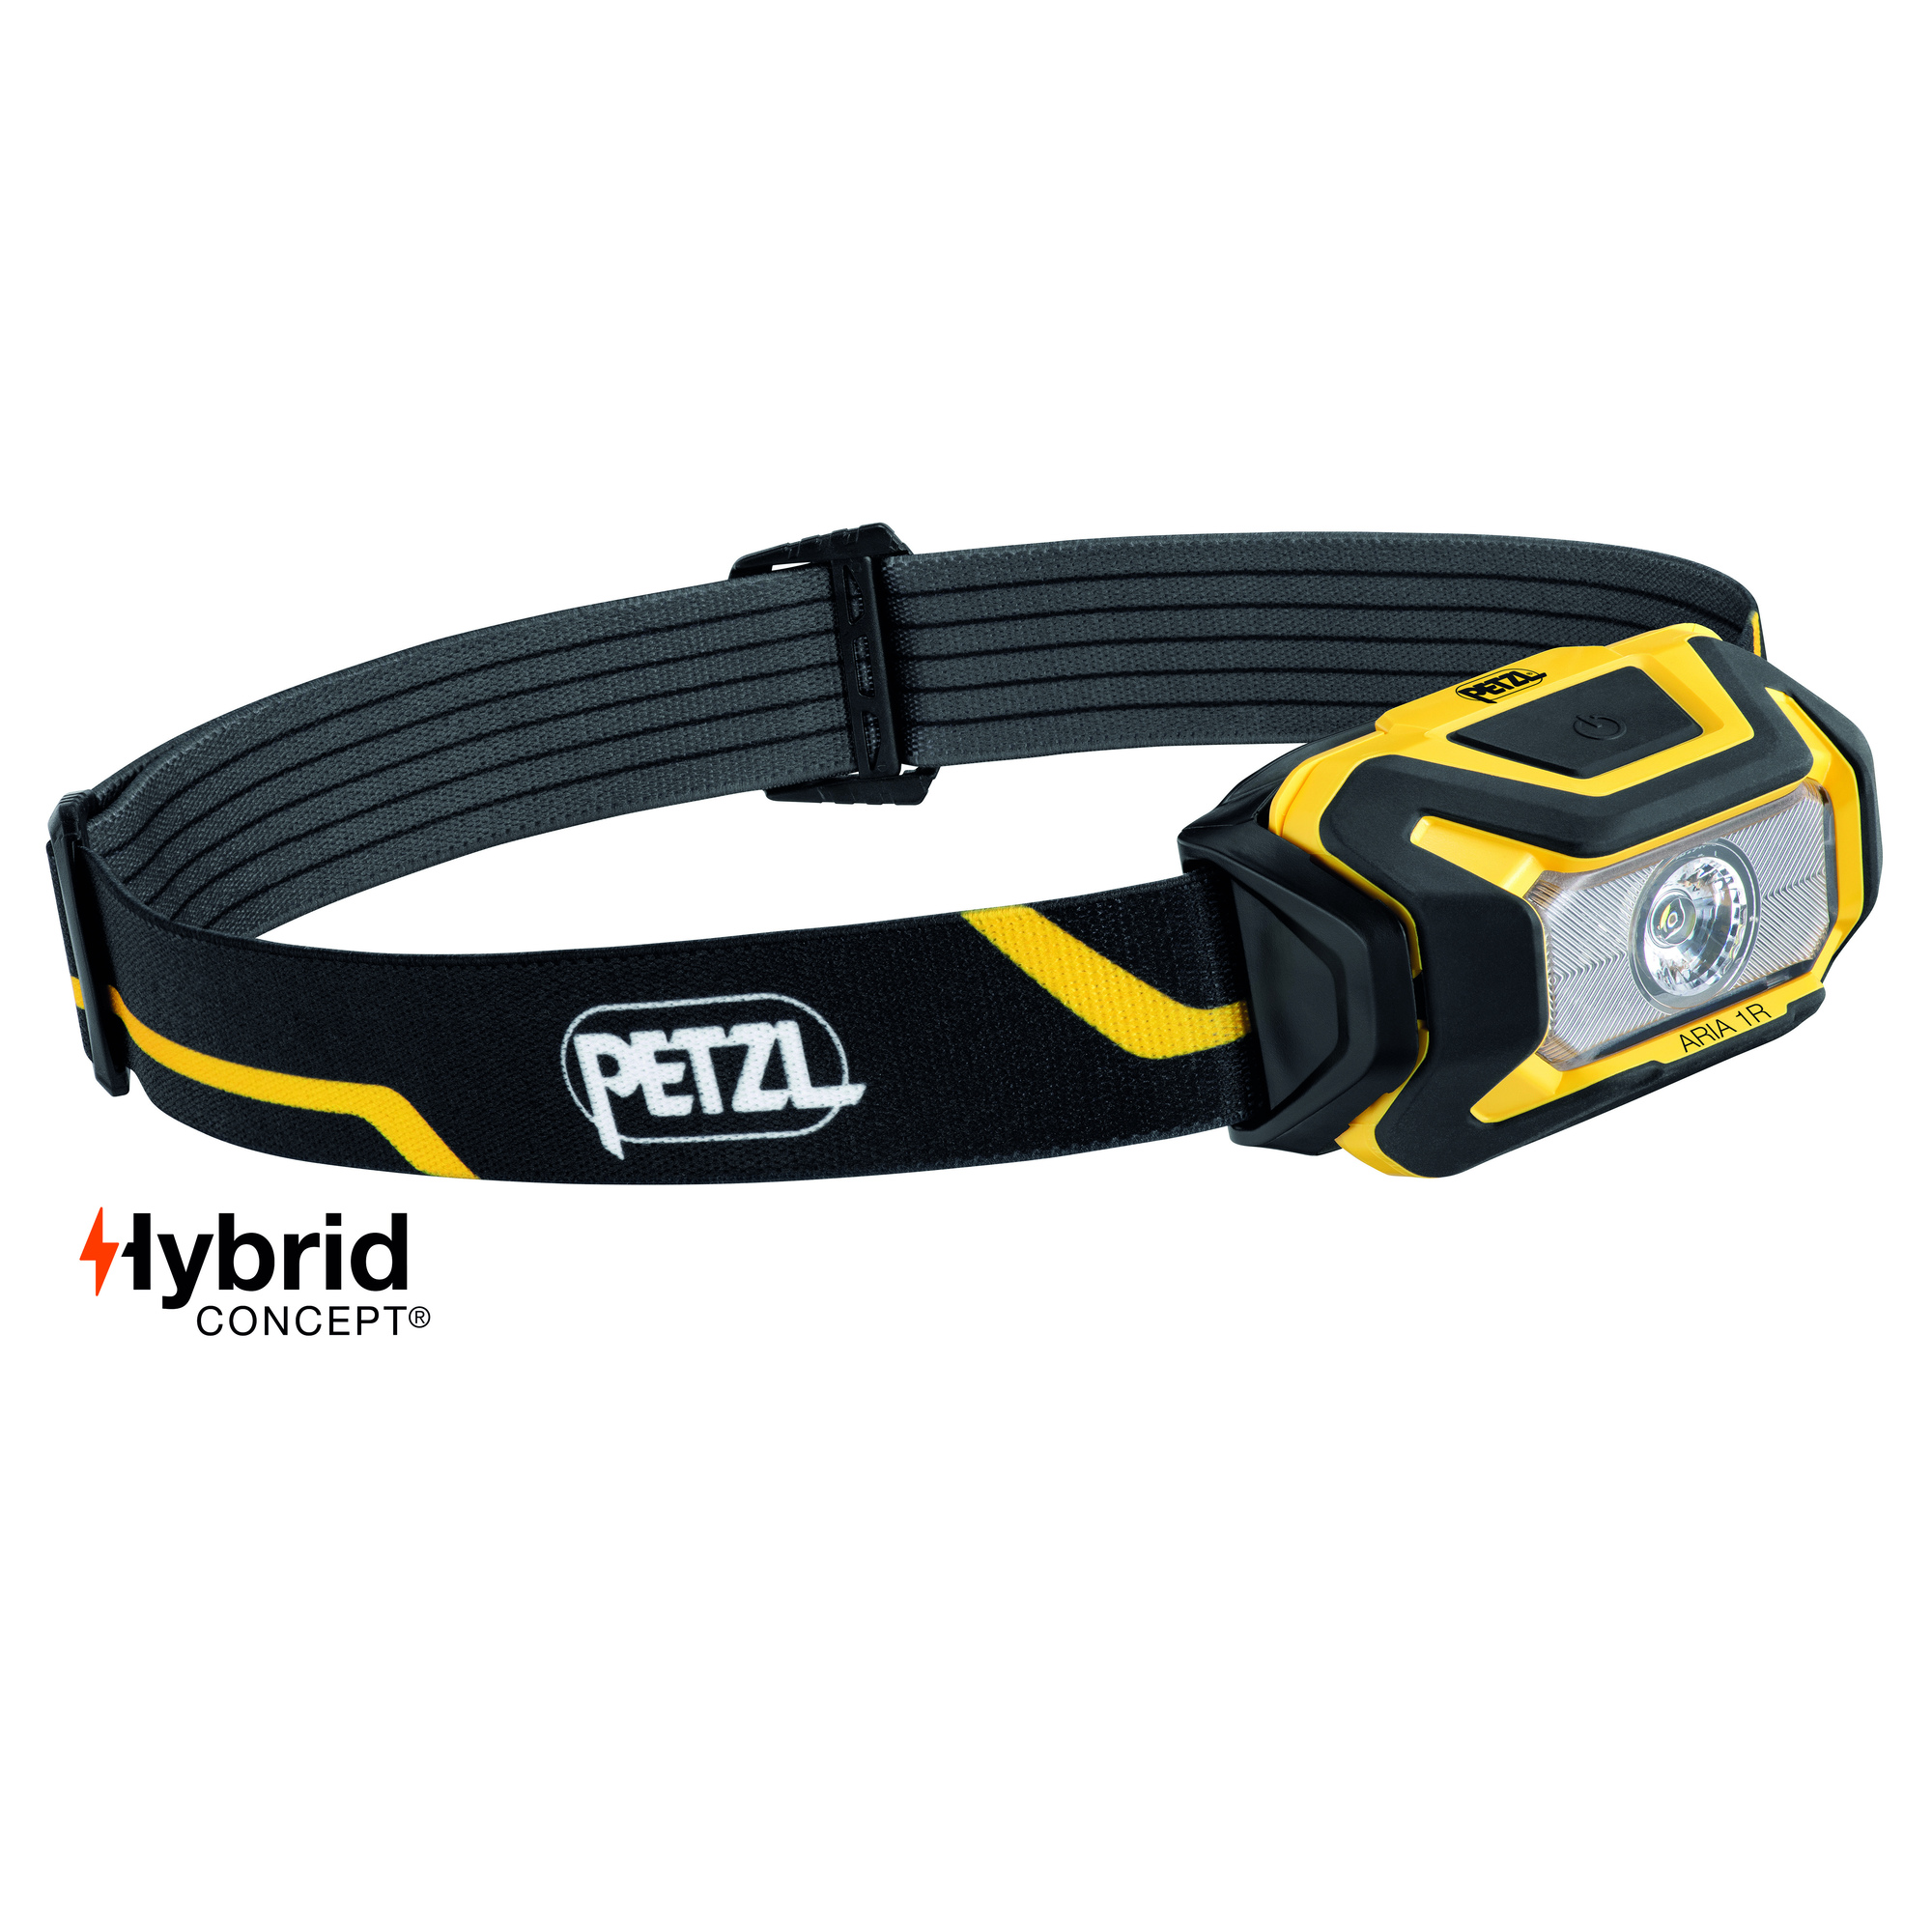 Petzl, ARIA 1R Rechargeable headlamp waterproof 450lumen, Light Output 450 lumen, Light Bulb Type LED, Model E069CA00